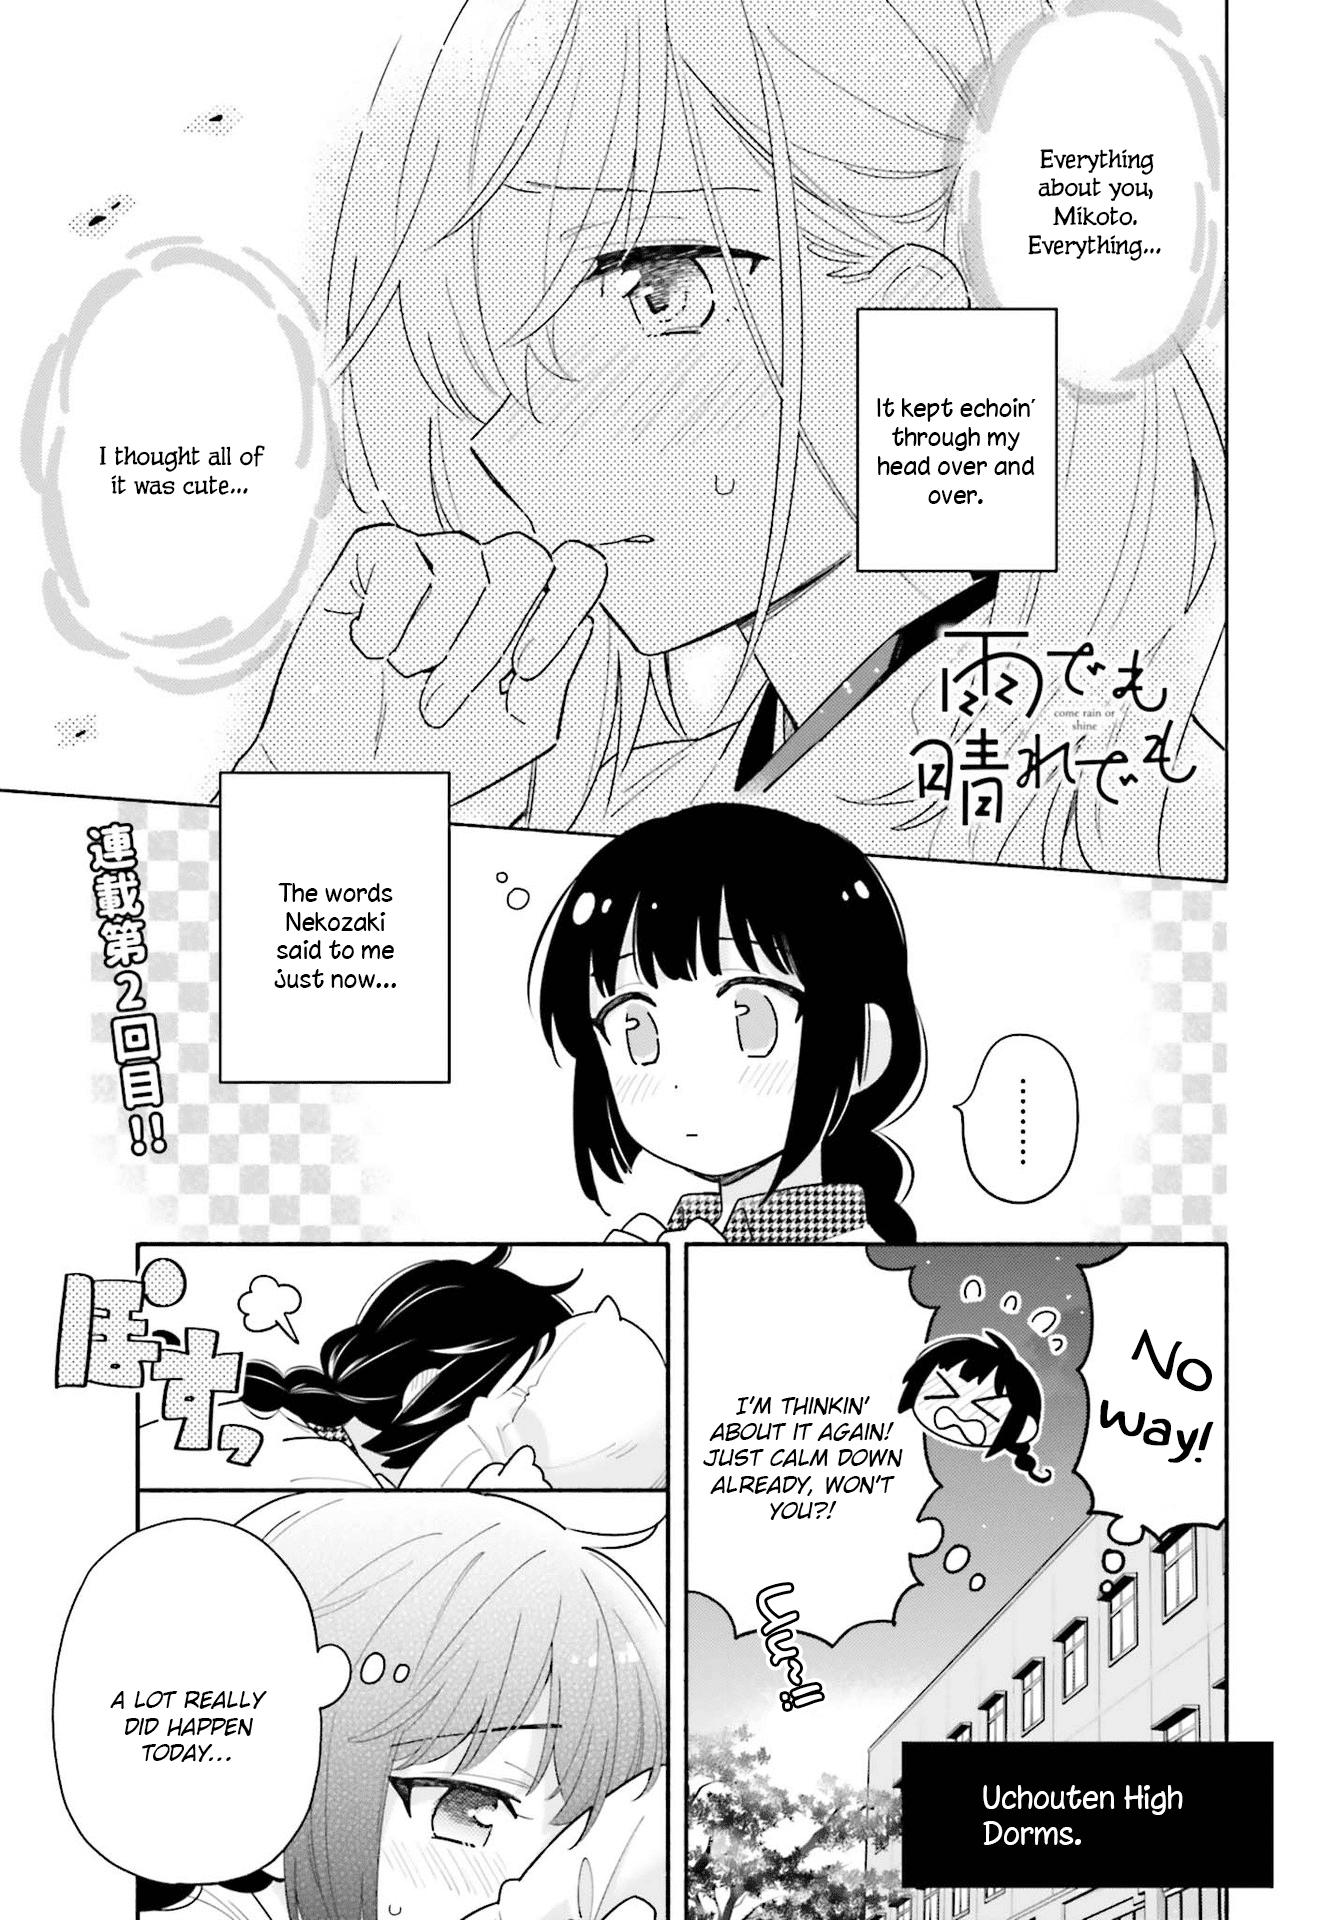 Come Rain Or Shine Manga Read Come Rain Or Shine Chapter 2 on Mangakakalot